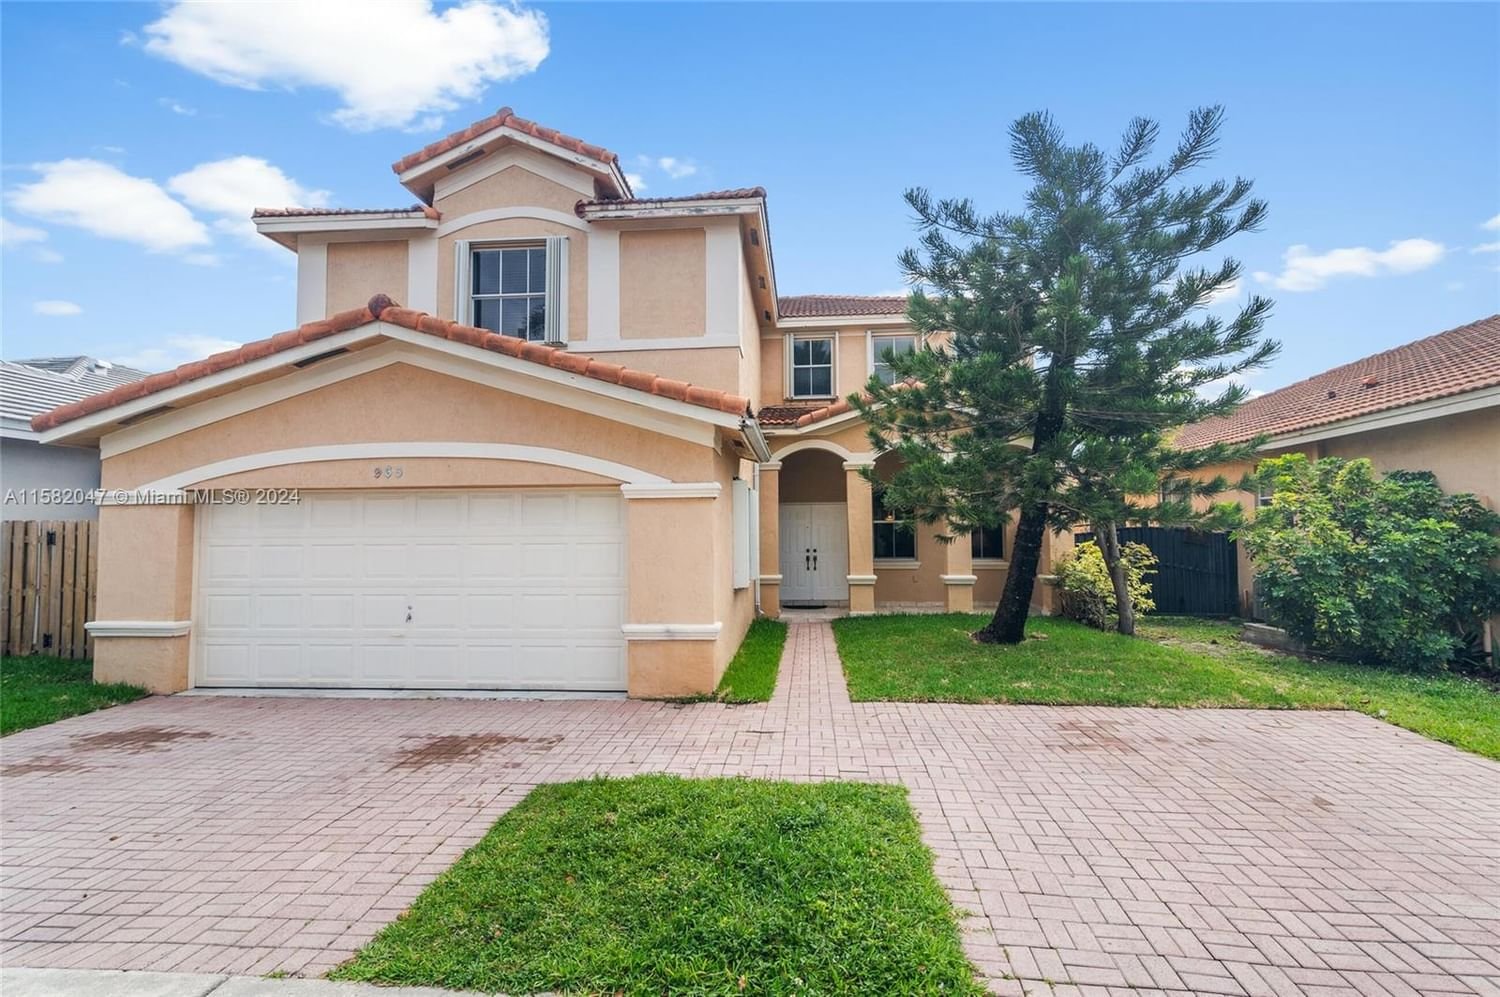 Real estate property located at 965 129th Ave, Miami-Dade County, SHOMA HOMES AT TAMIAMI IV, Miami, FL